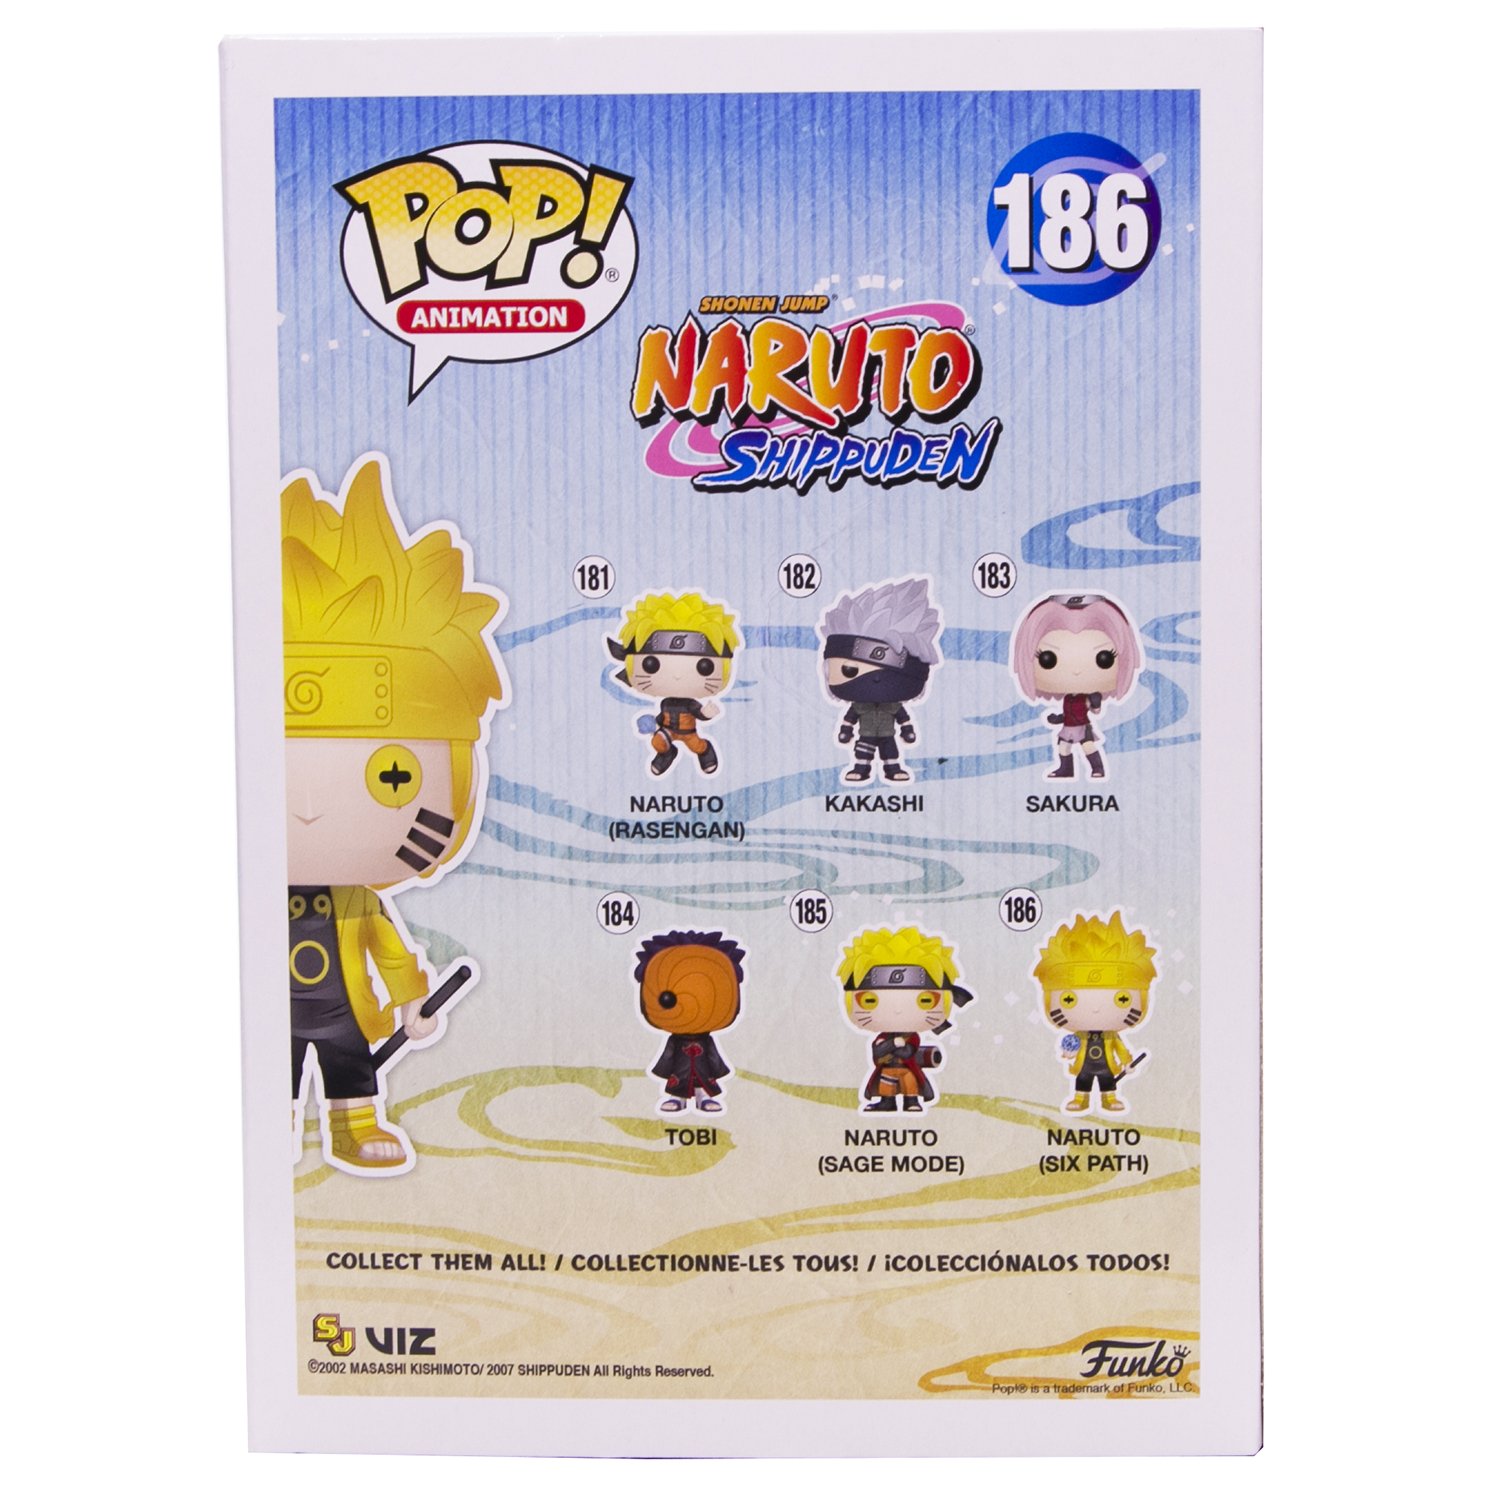 Фигурка Funko Pop! Animation Naruto Shippuden Naruto Six Path Fun 25492100